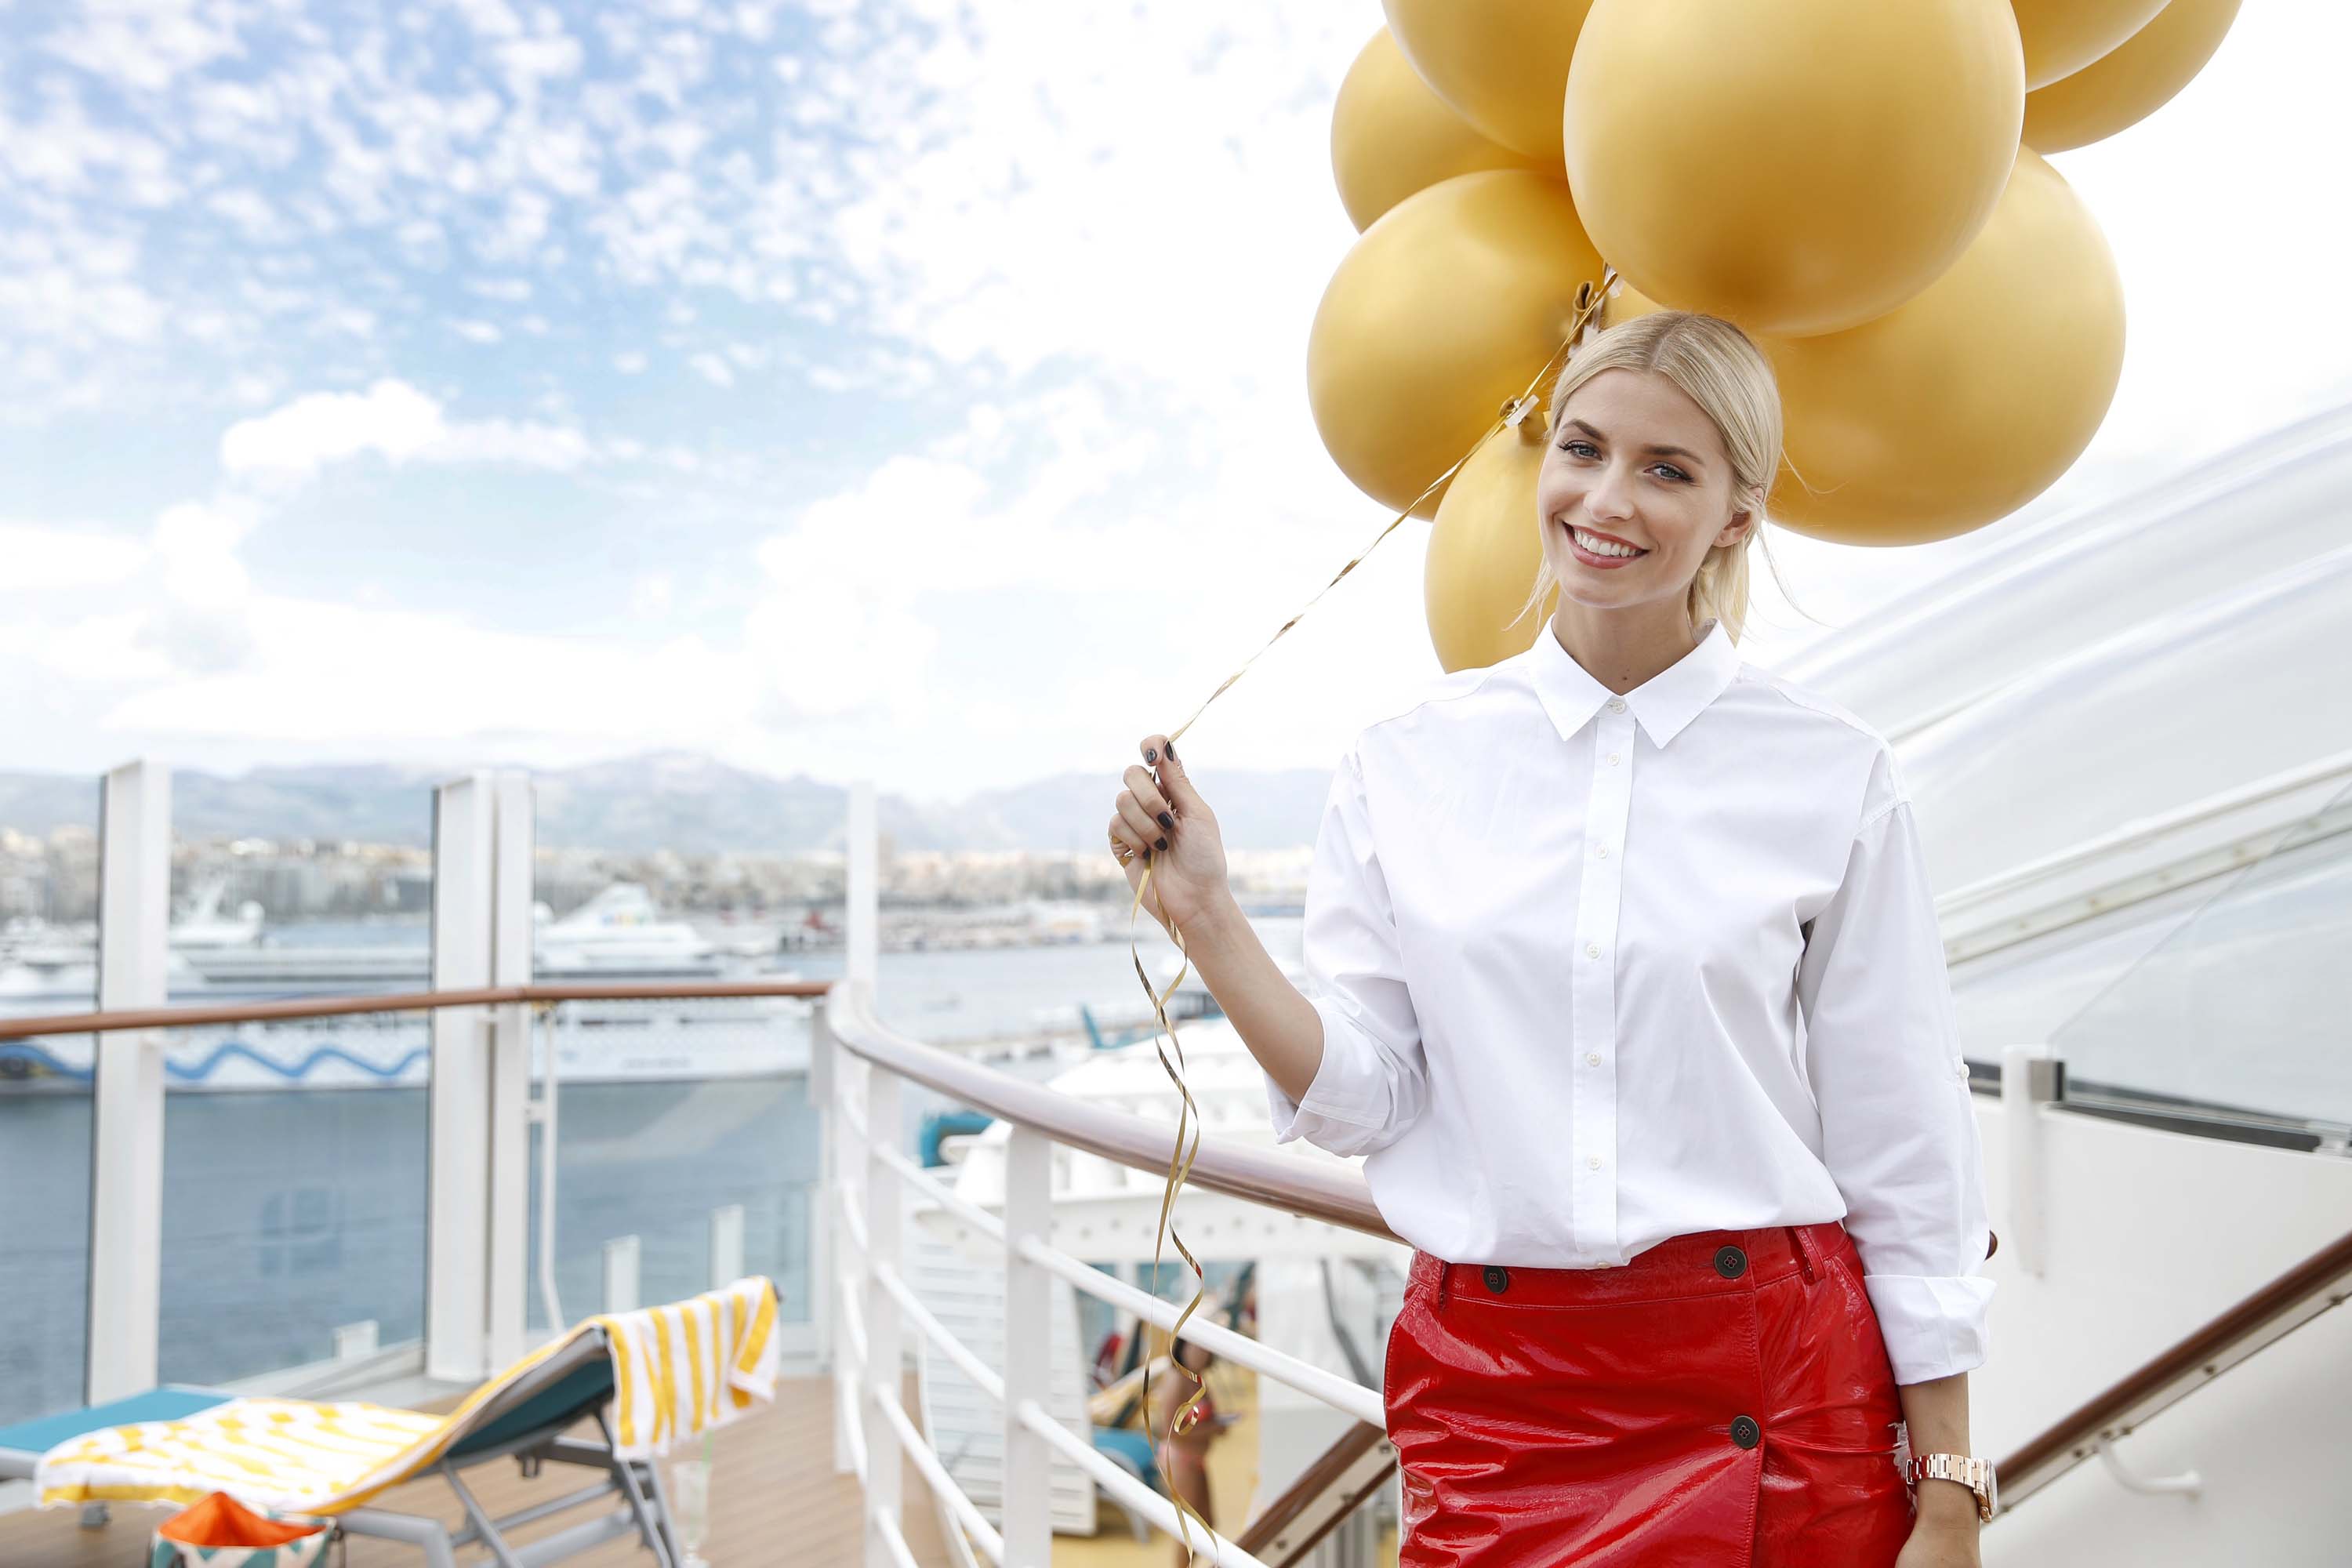 Lena Gercke on board of AIDAperla Cruise Ship